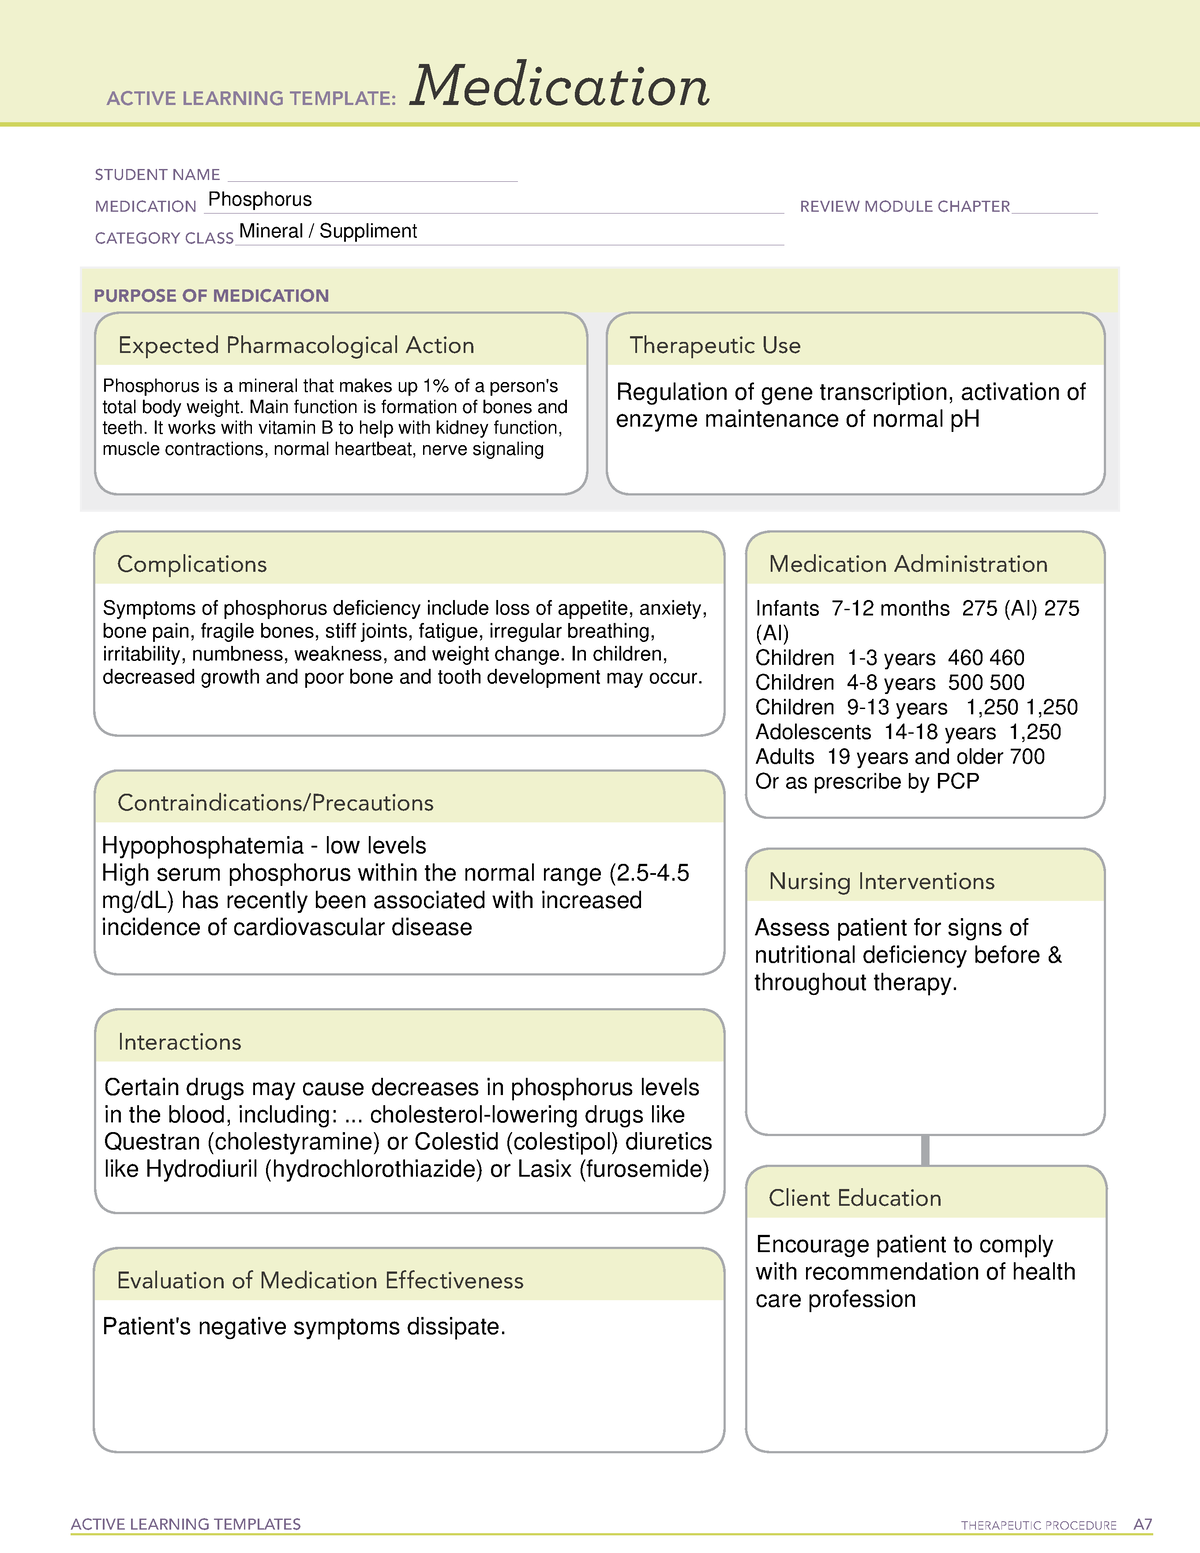 ati-phosphorus-medication-sheet-active-learning-templates-therapeutic